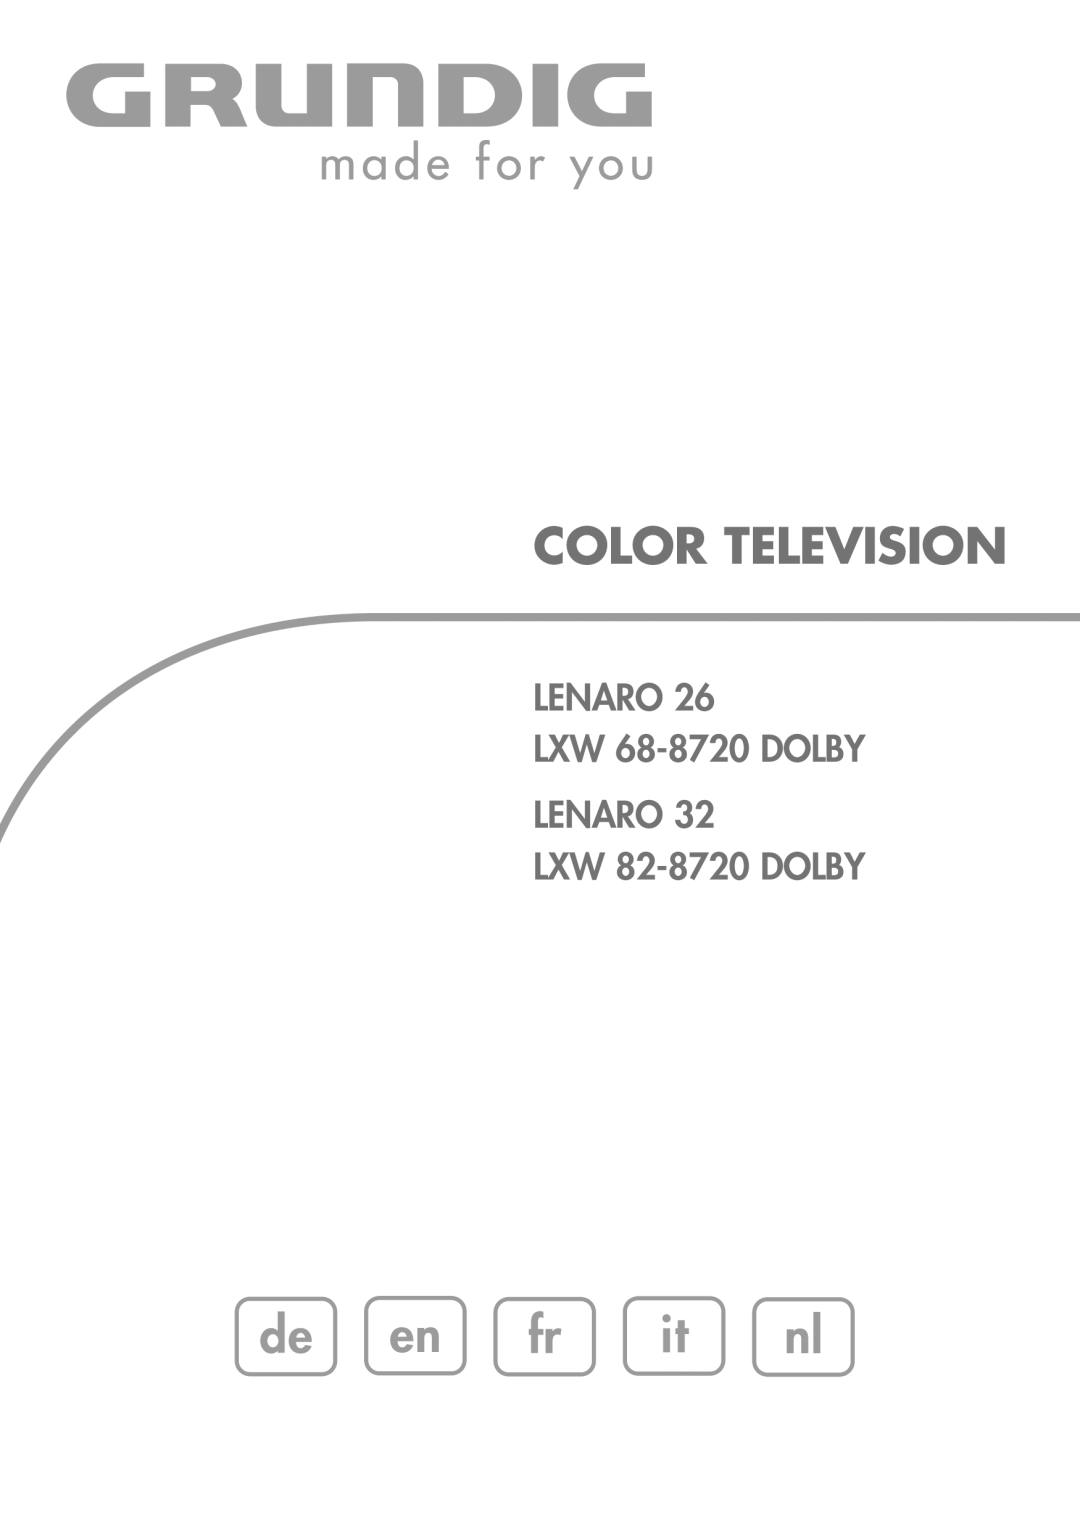 Grundig manual Color Television, LENARO LXW 68-8720 DOLBY LENARO LXW 82-8720 DOLBY 